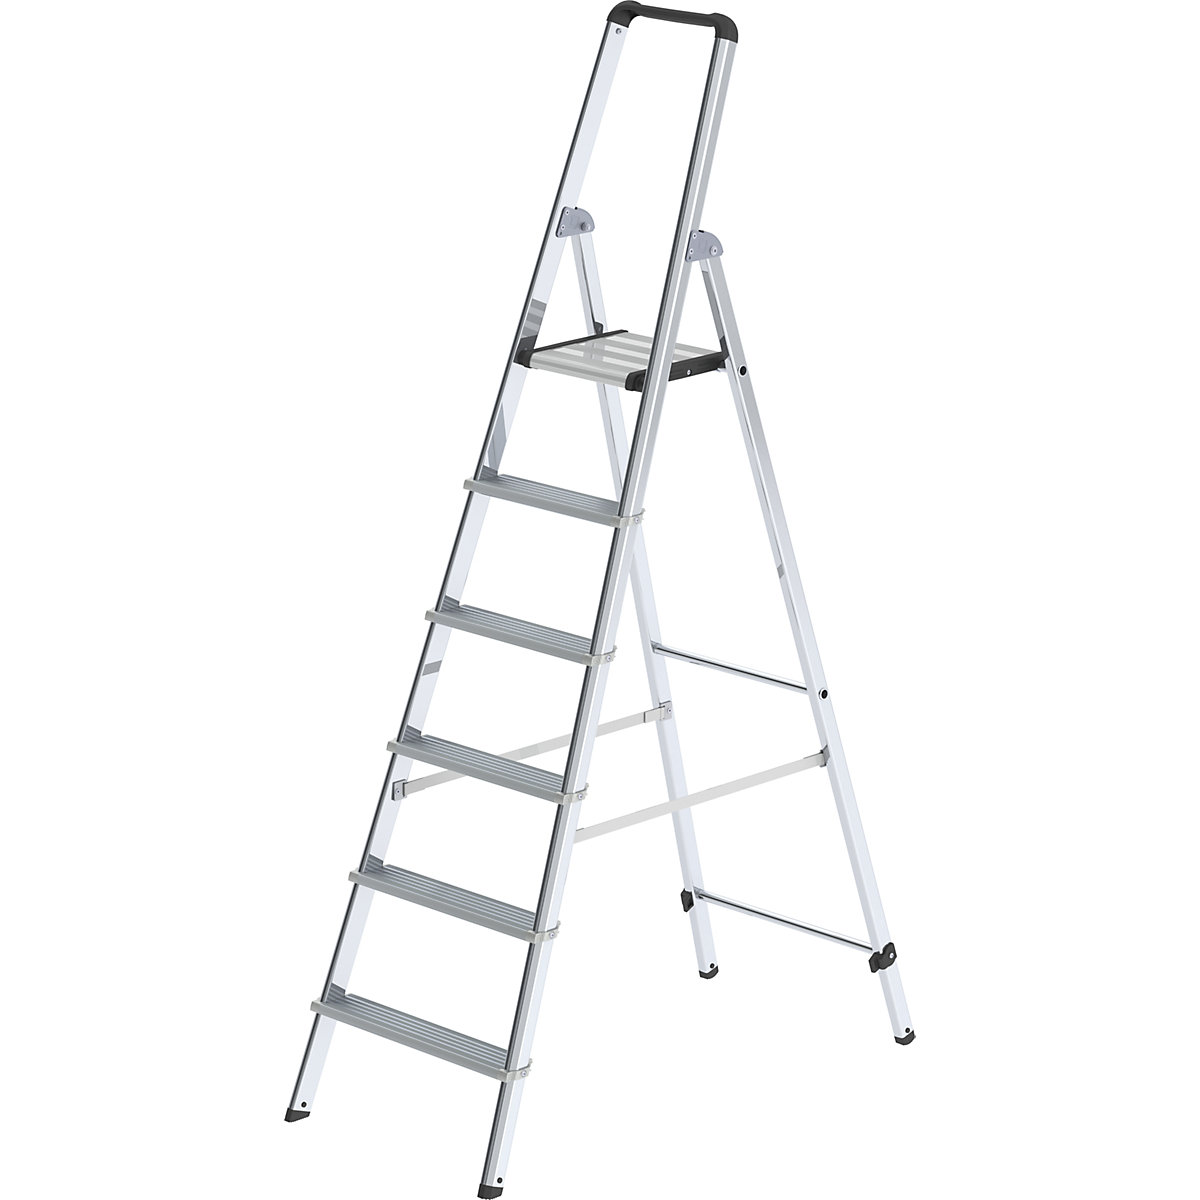 Aluminium step ladder, single sided access – MUNK, with ergonomic rail and storage tray, 6 steps-6